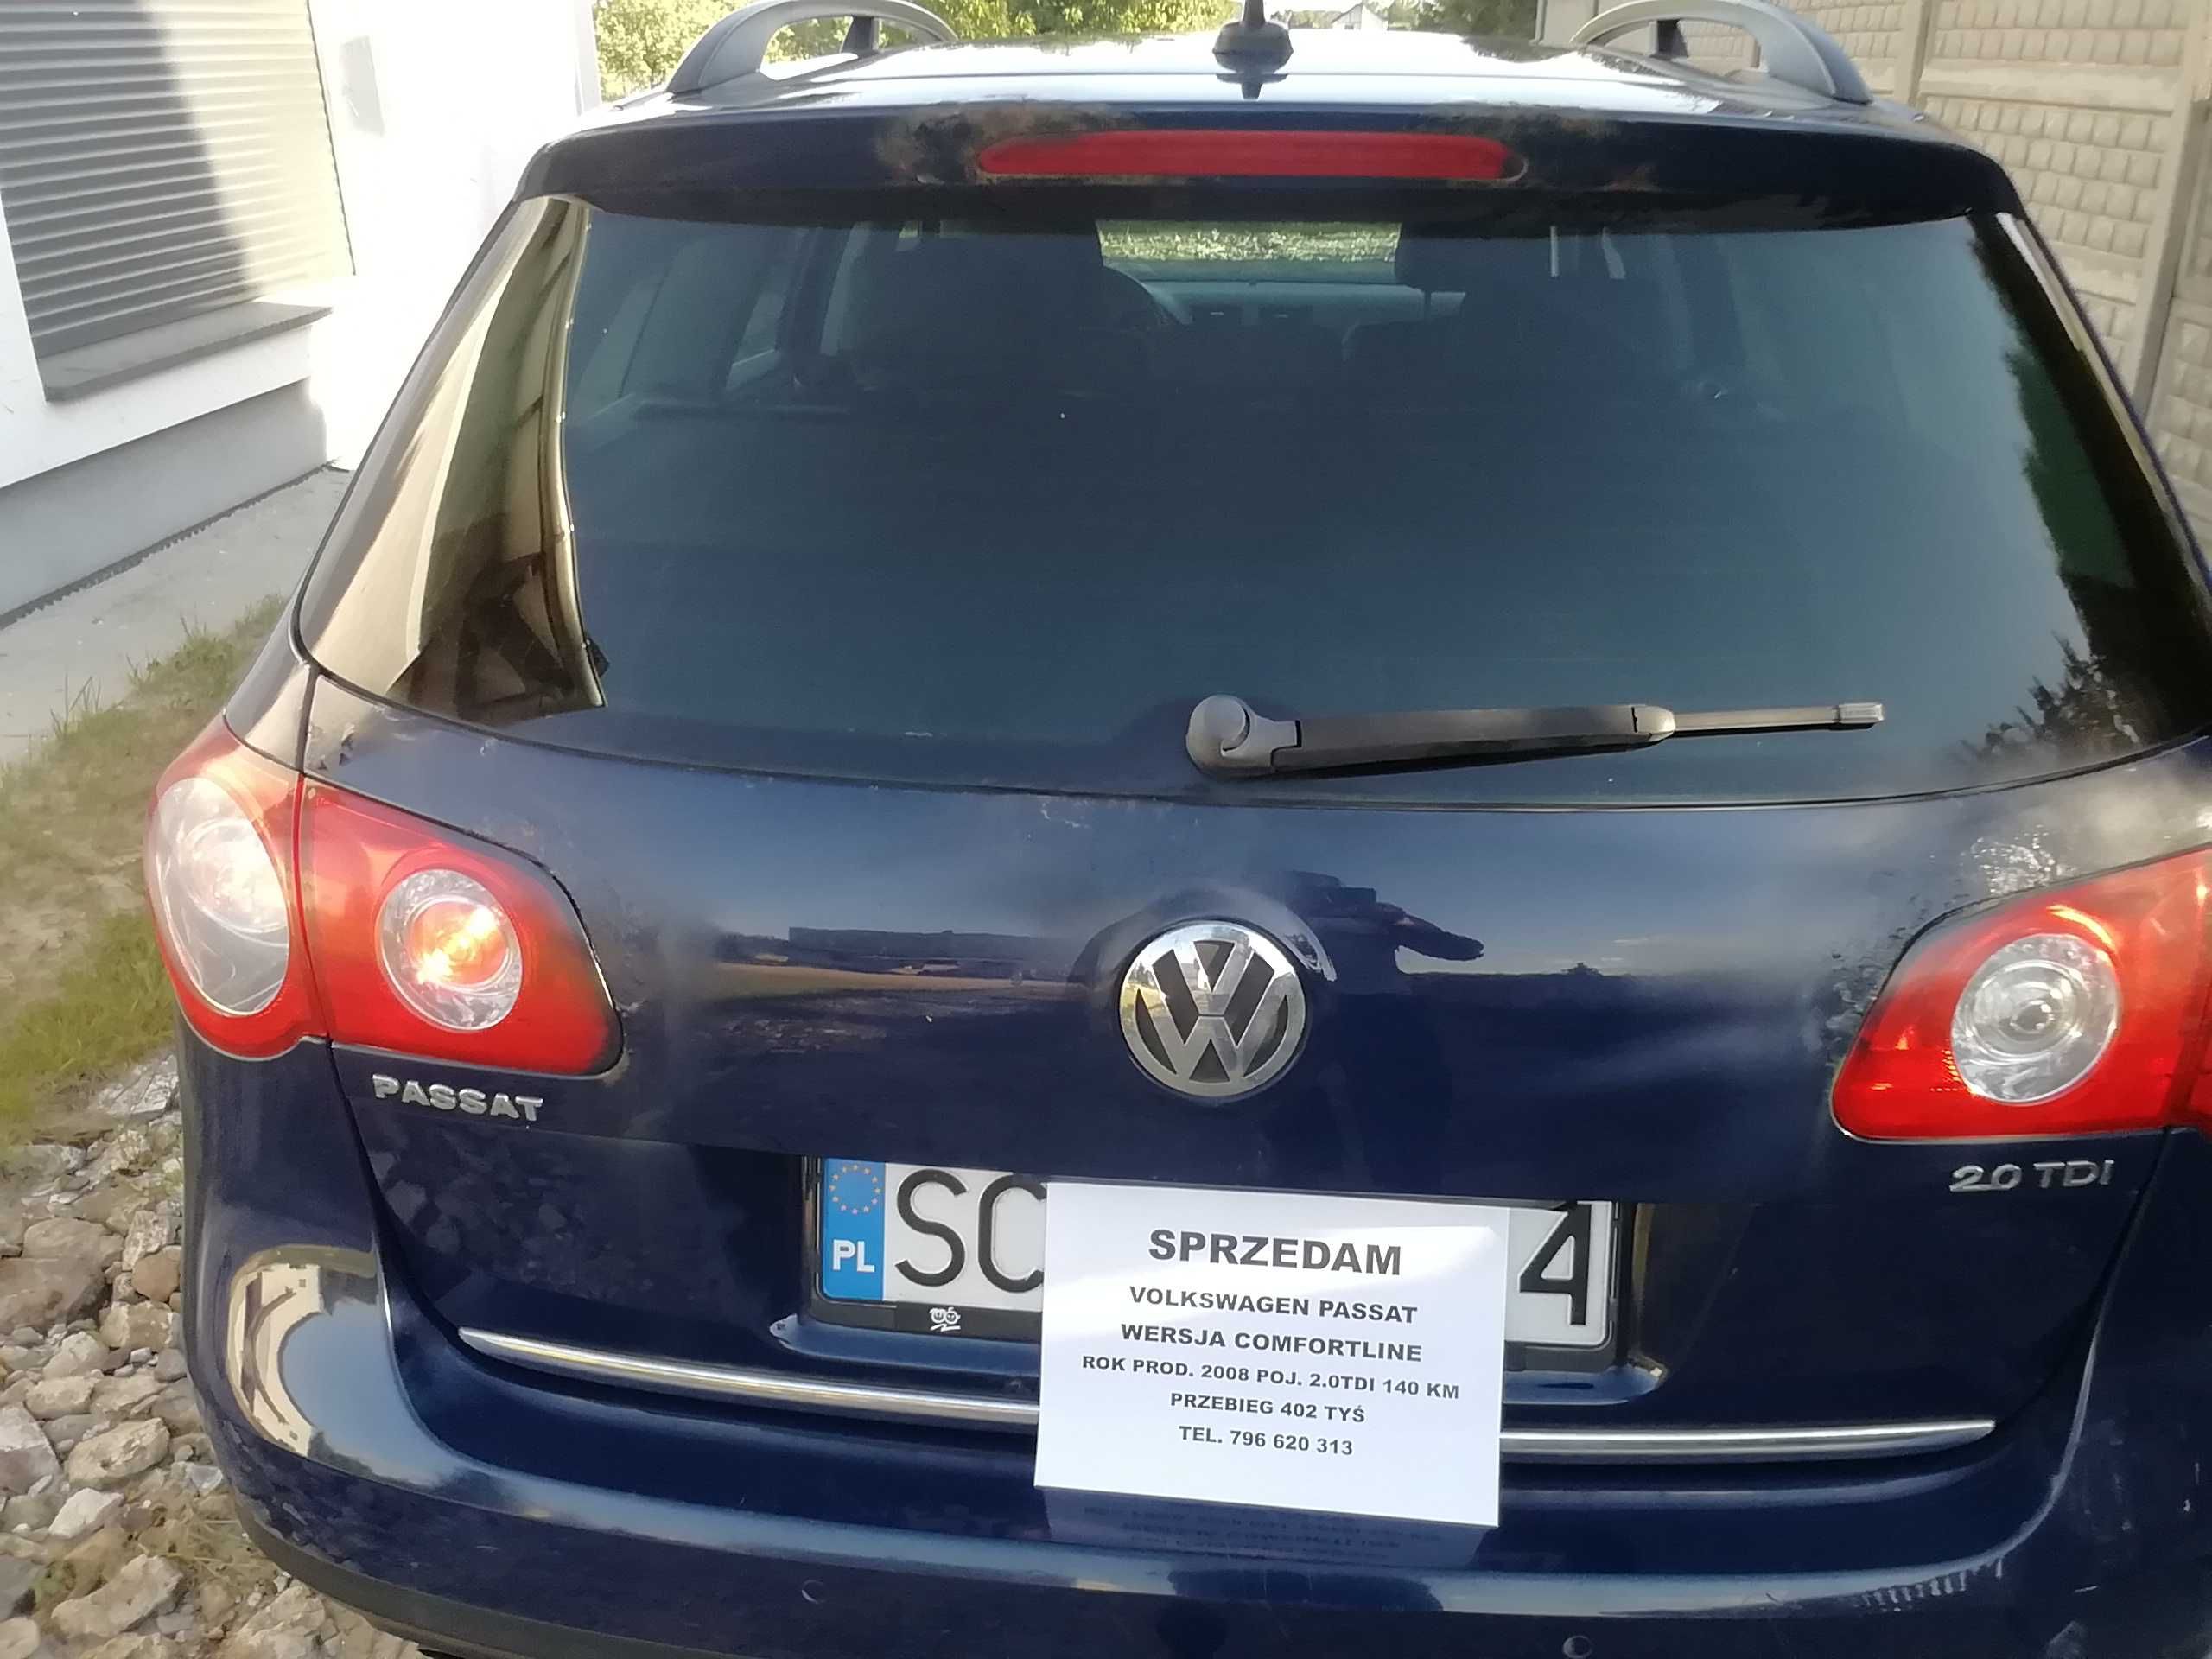 Volkswagen Passat b6 2.0tdi 140 km